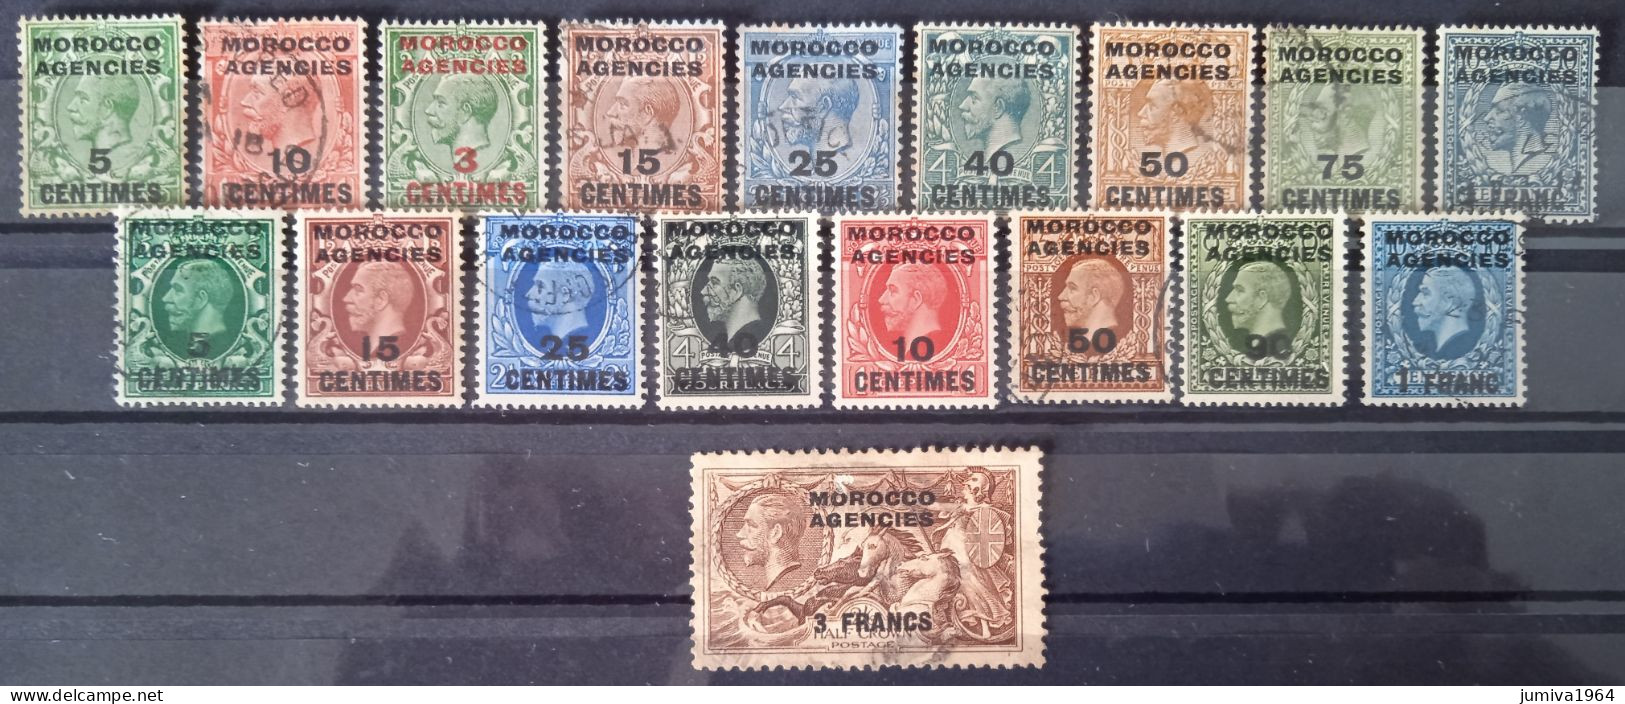 UK - Morocco - Maroc - Marruecos - Zone Française N°1 - TB - Morocco Agencies / Tangier (...-1958)